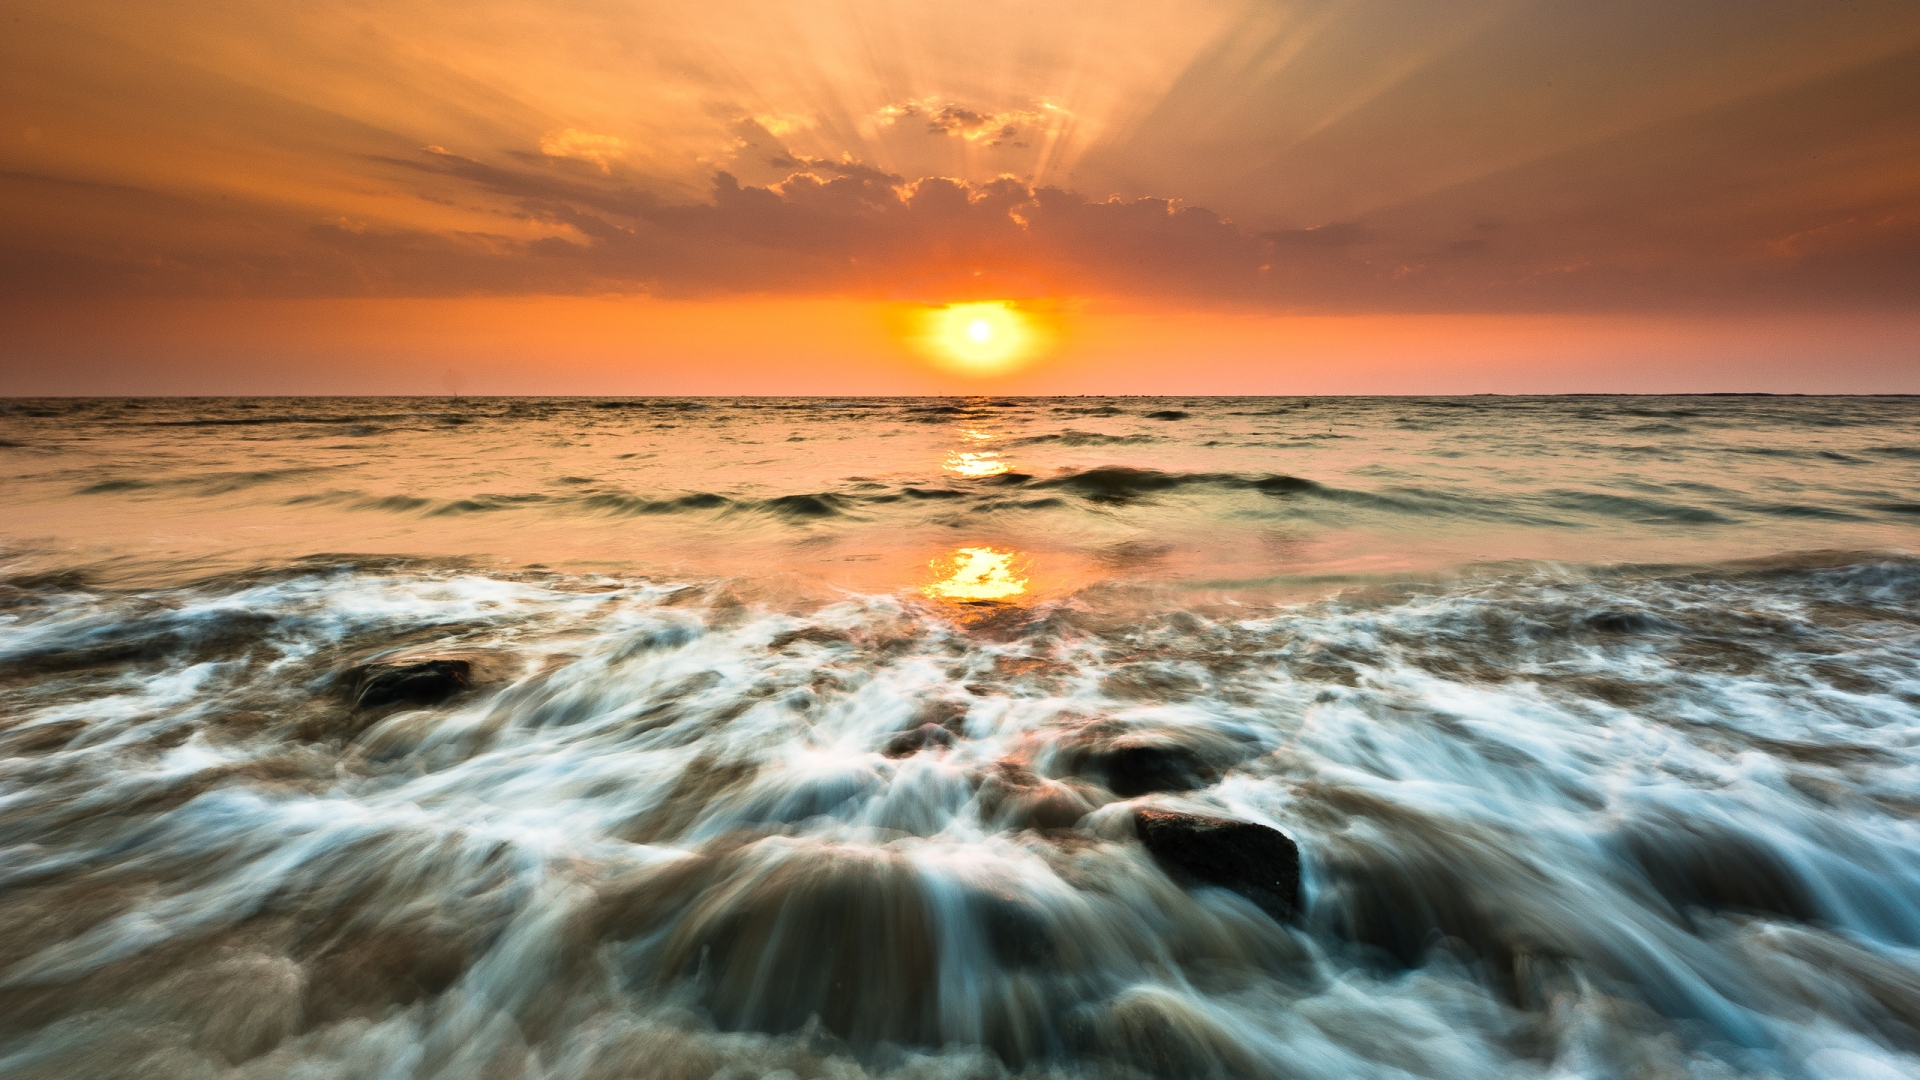 Gorai Beach Sunset for 1920 x 1080 HDTV 1080p resolution